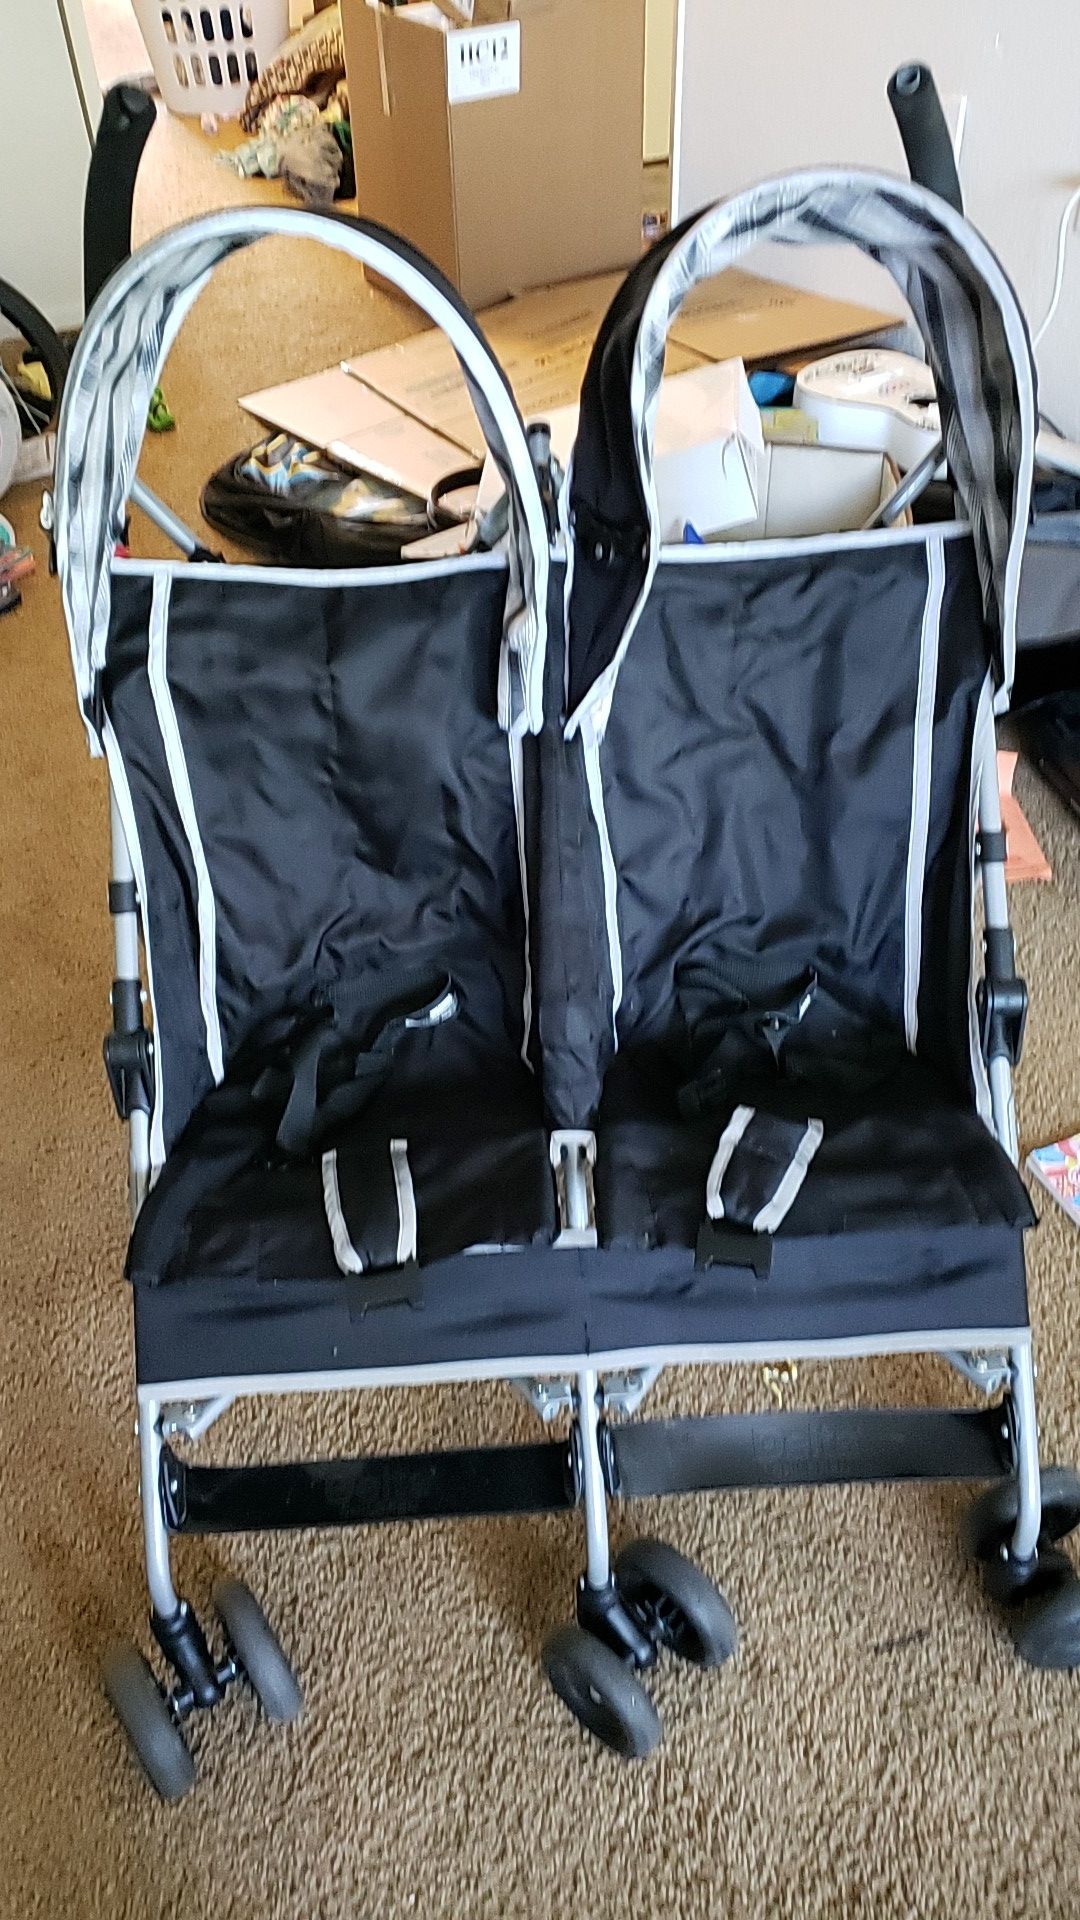 DELTA Double stroller